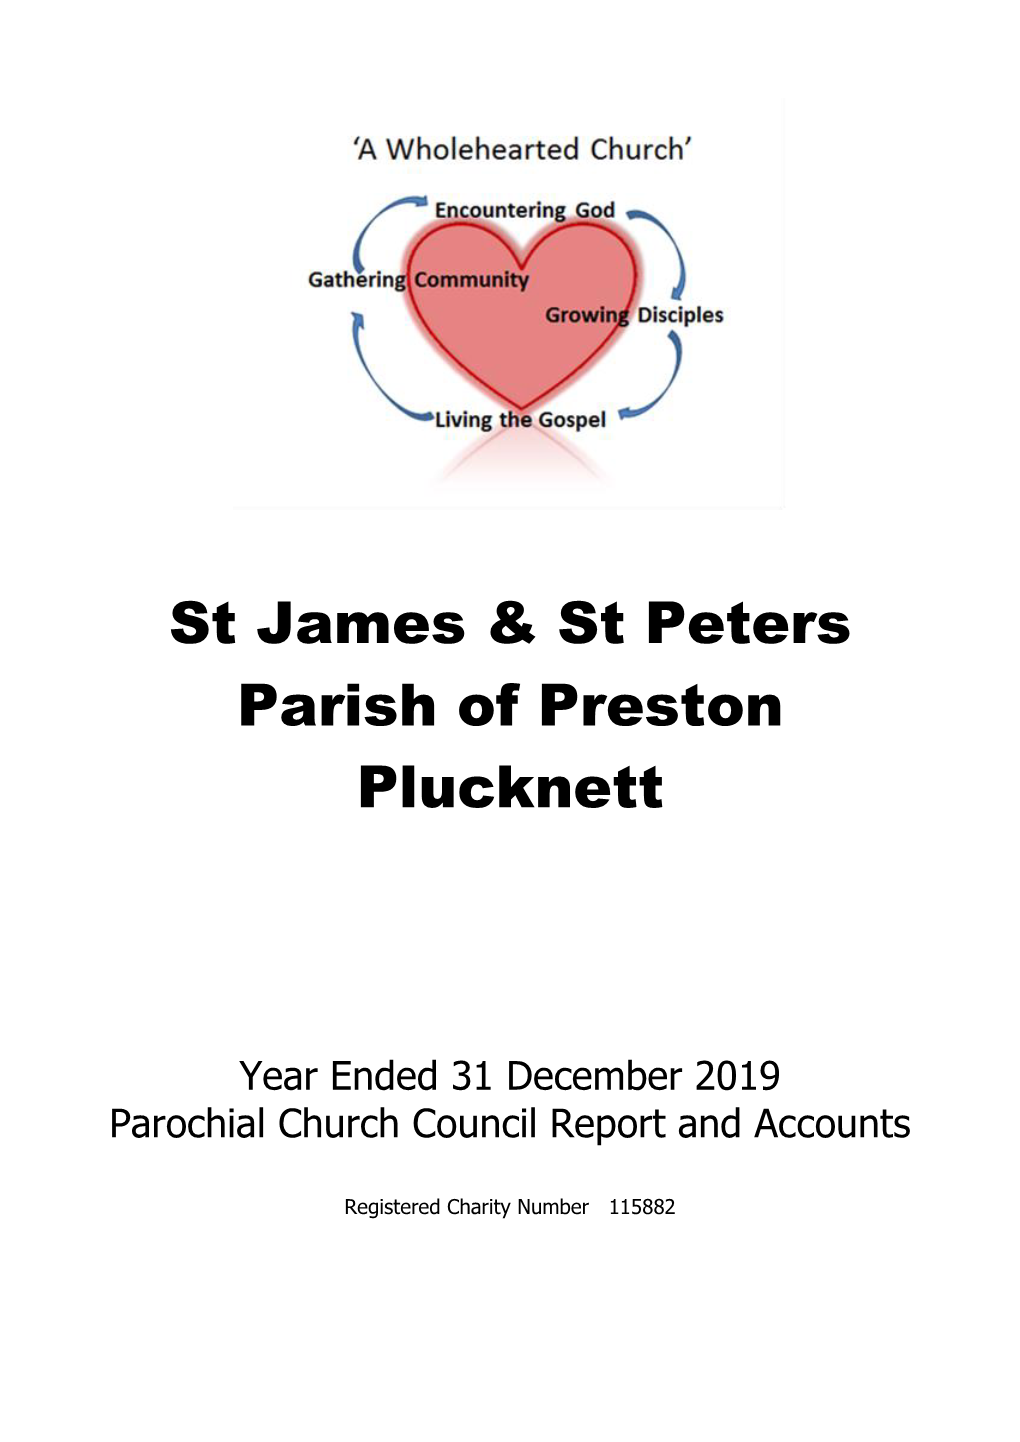 St James & St Peters Parish of Preston Plucknett